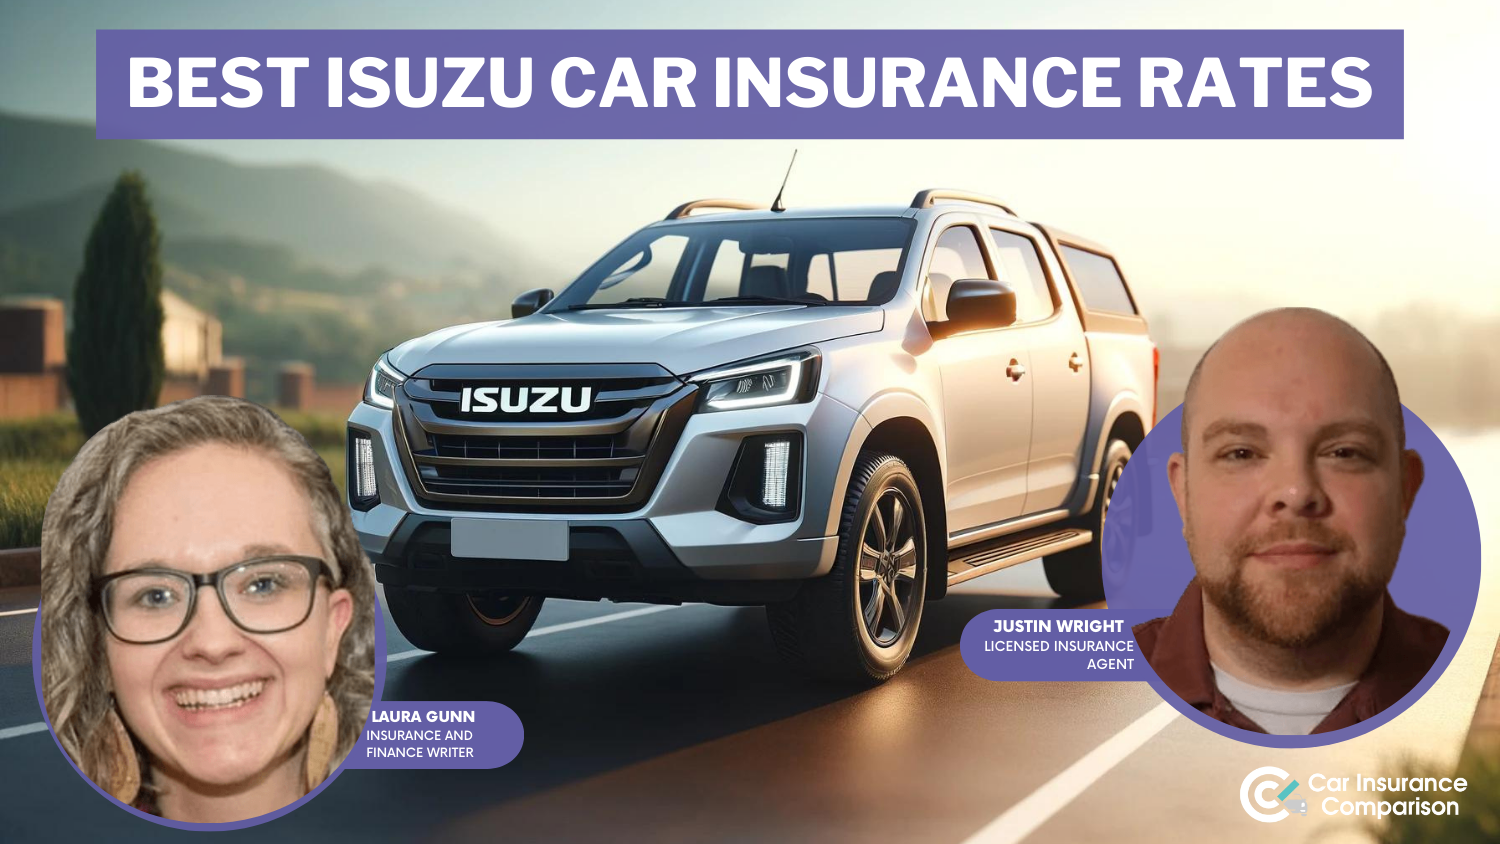 Best Isuzu Car Insurance Rates - The General, Progressive, State Farm